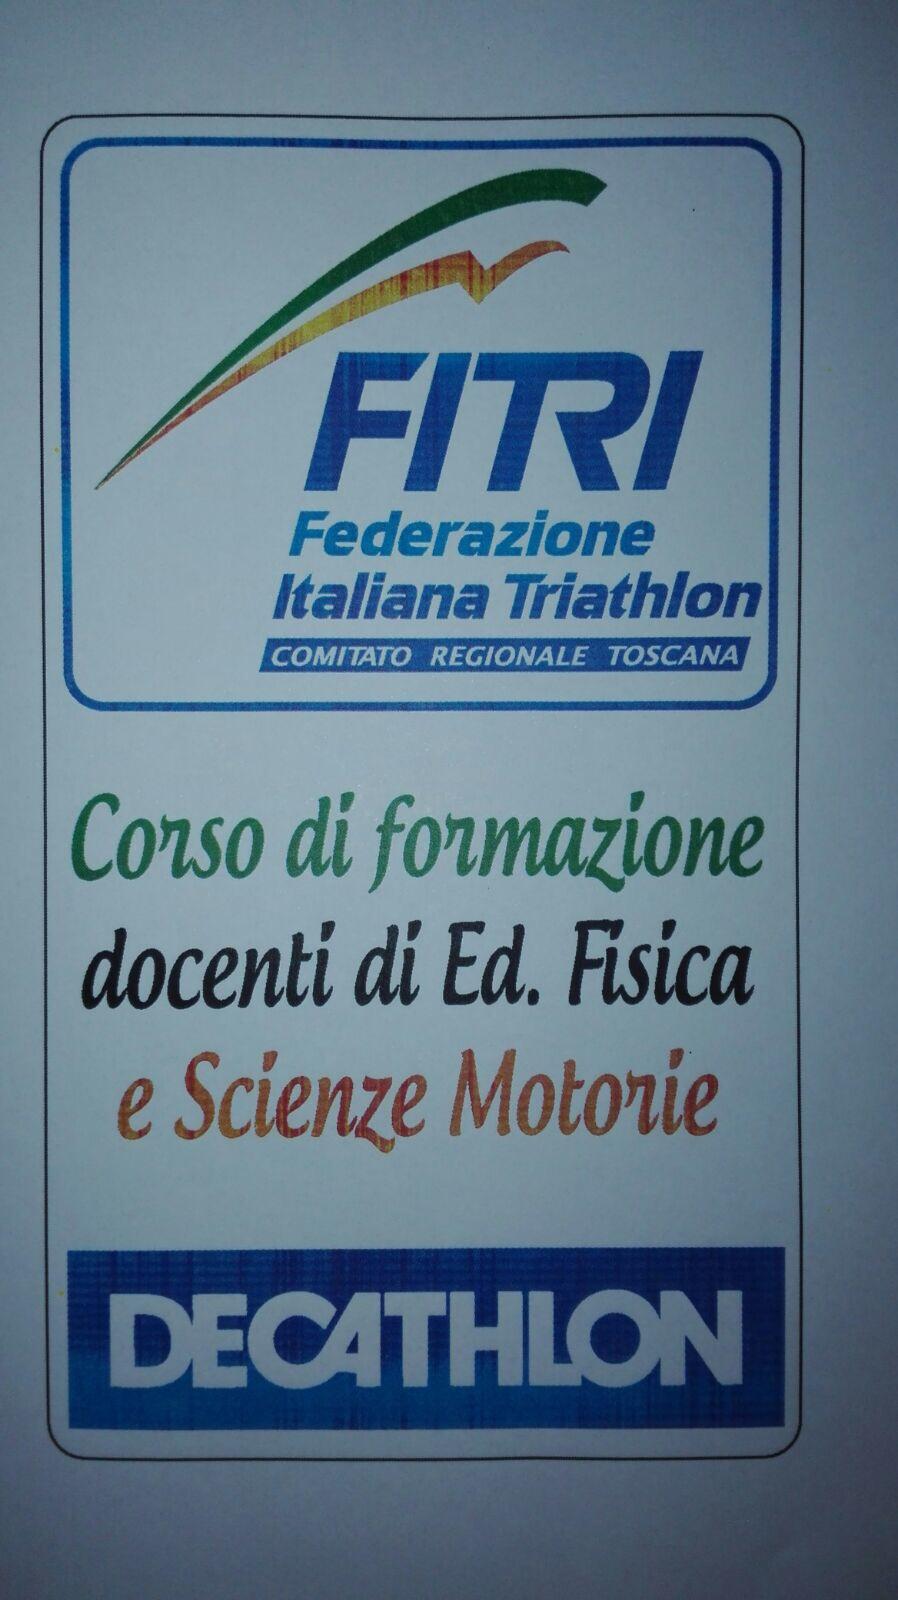 images/toscana/medium/Logo_Corso_Formazione_Docenti2.JPG